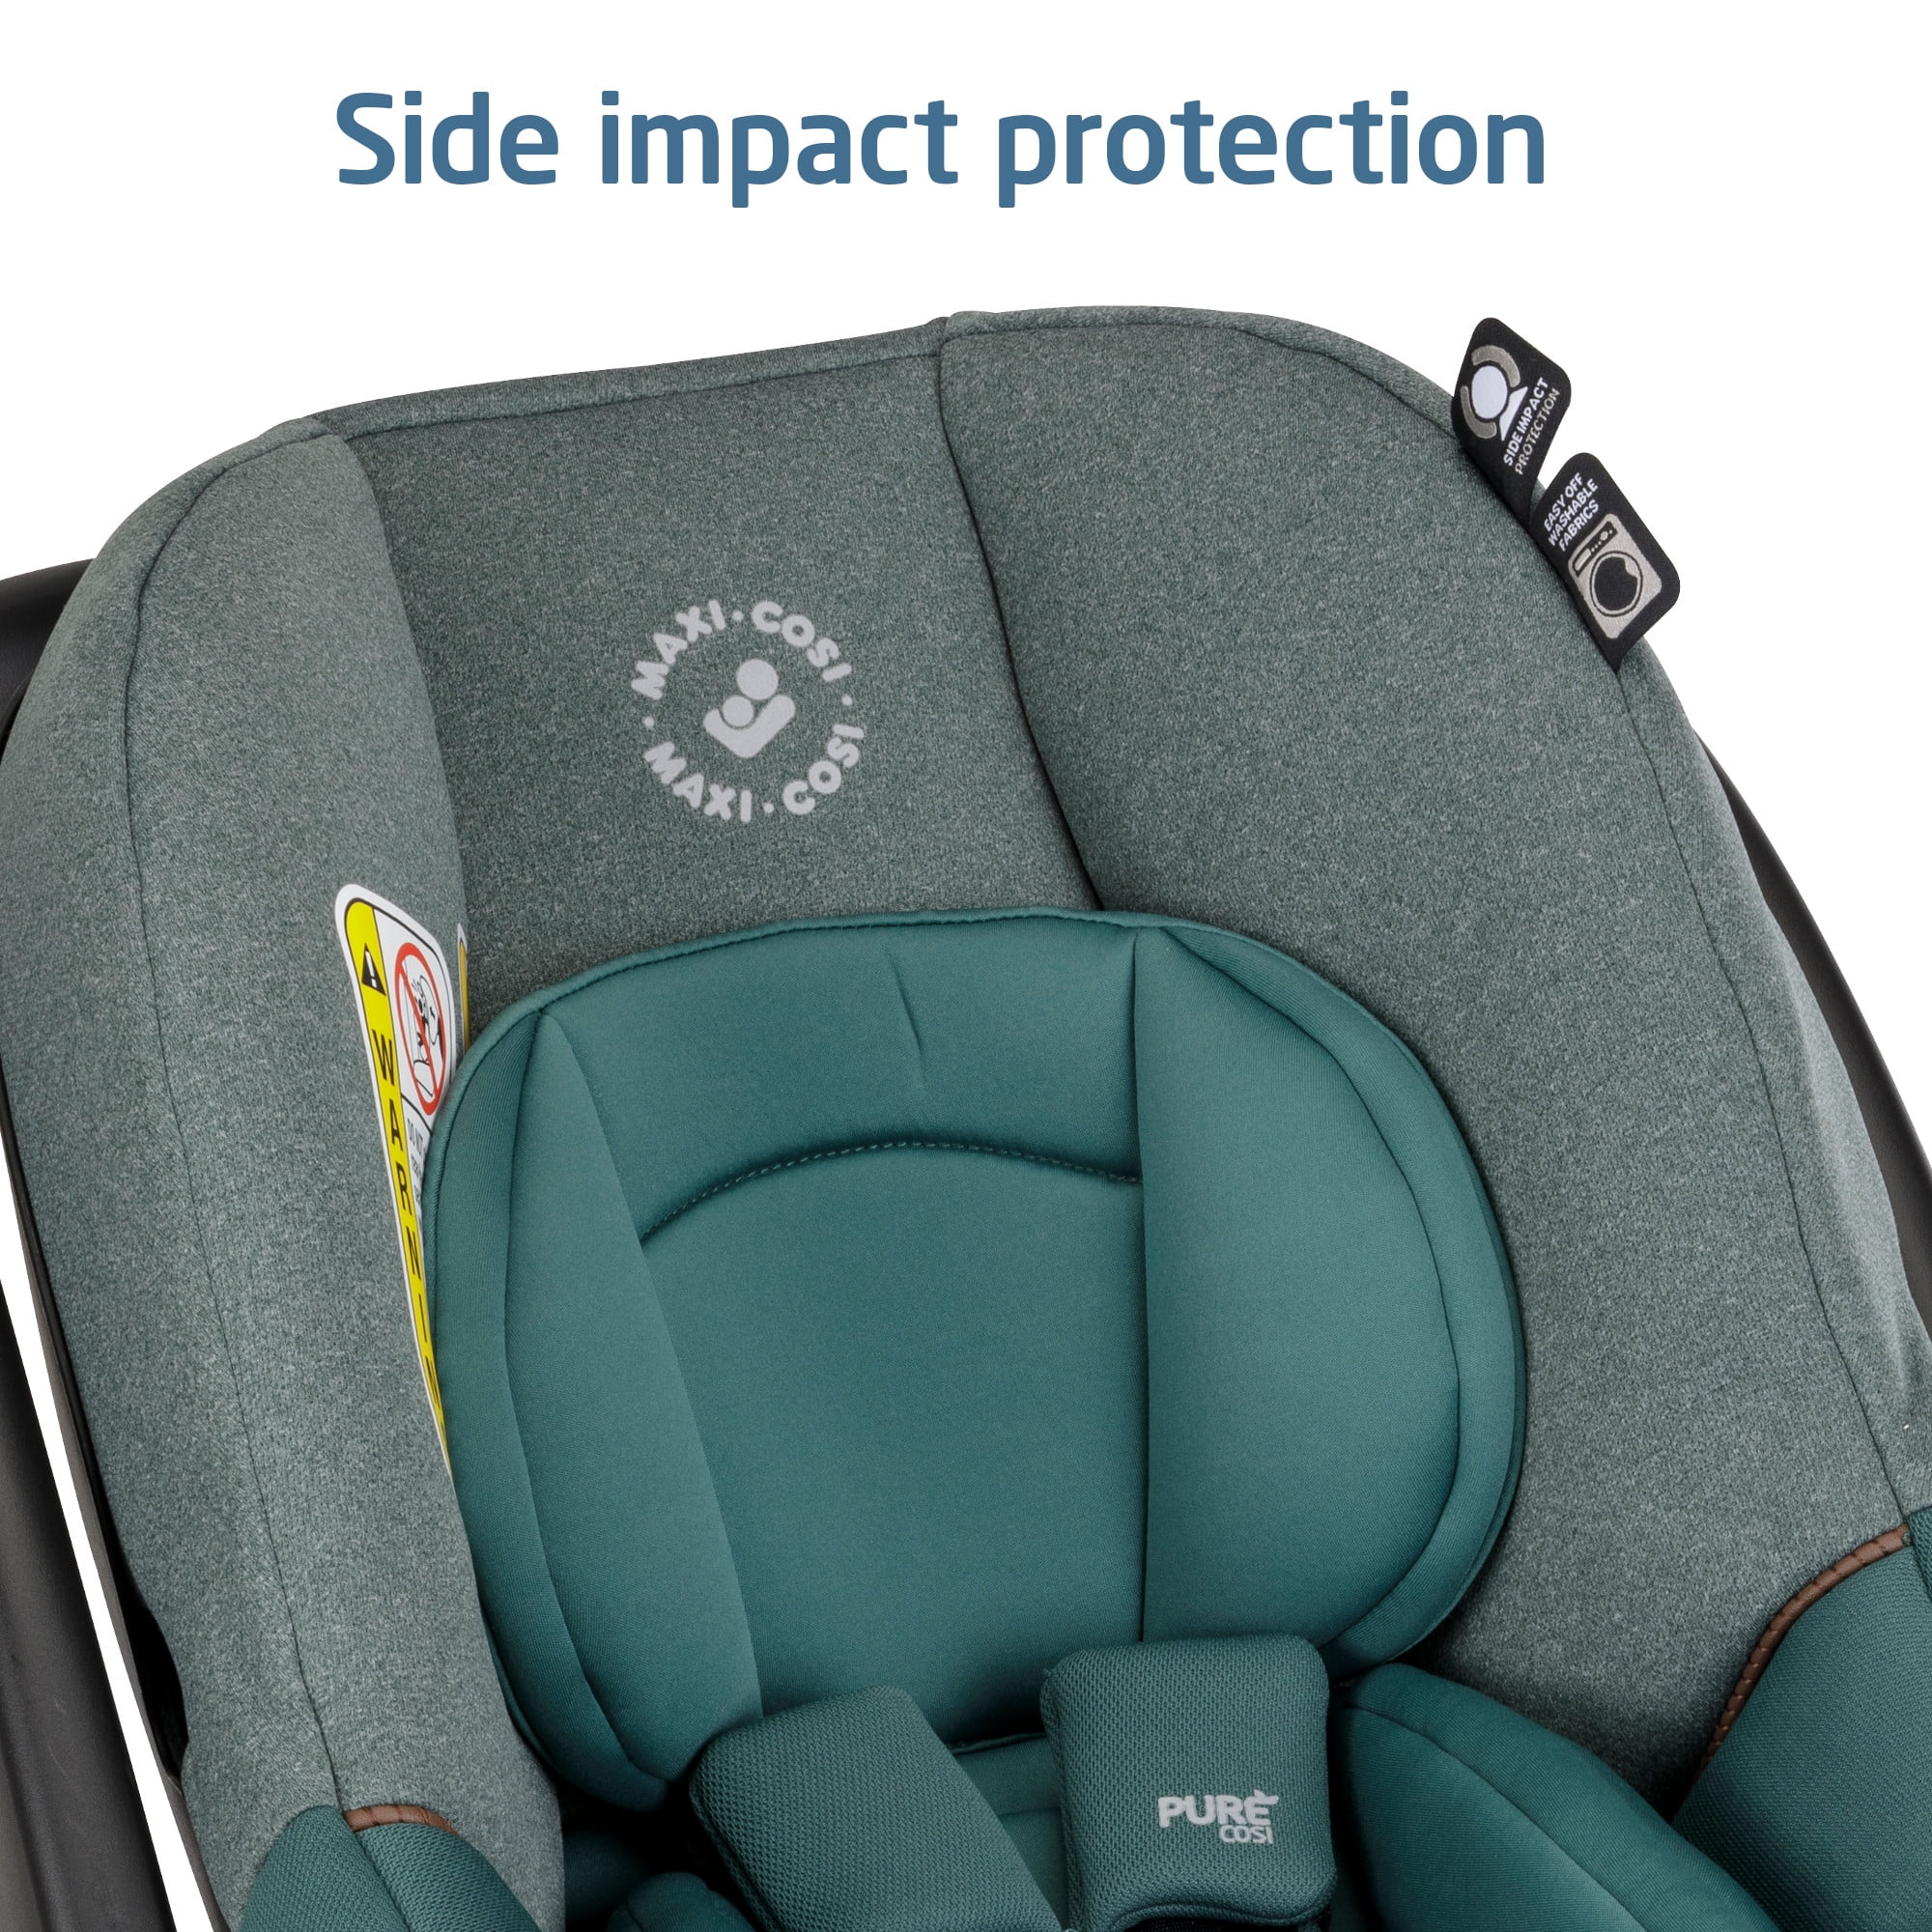 Maxi Cosi MICA PRO ECO I-SIZE - swivel child car seat 0-18 kg